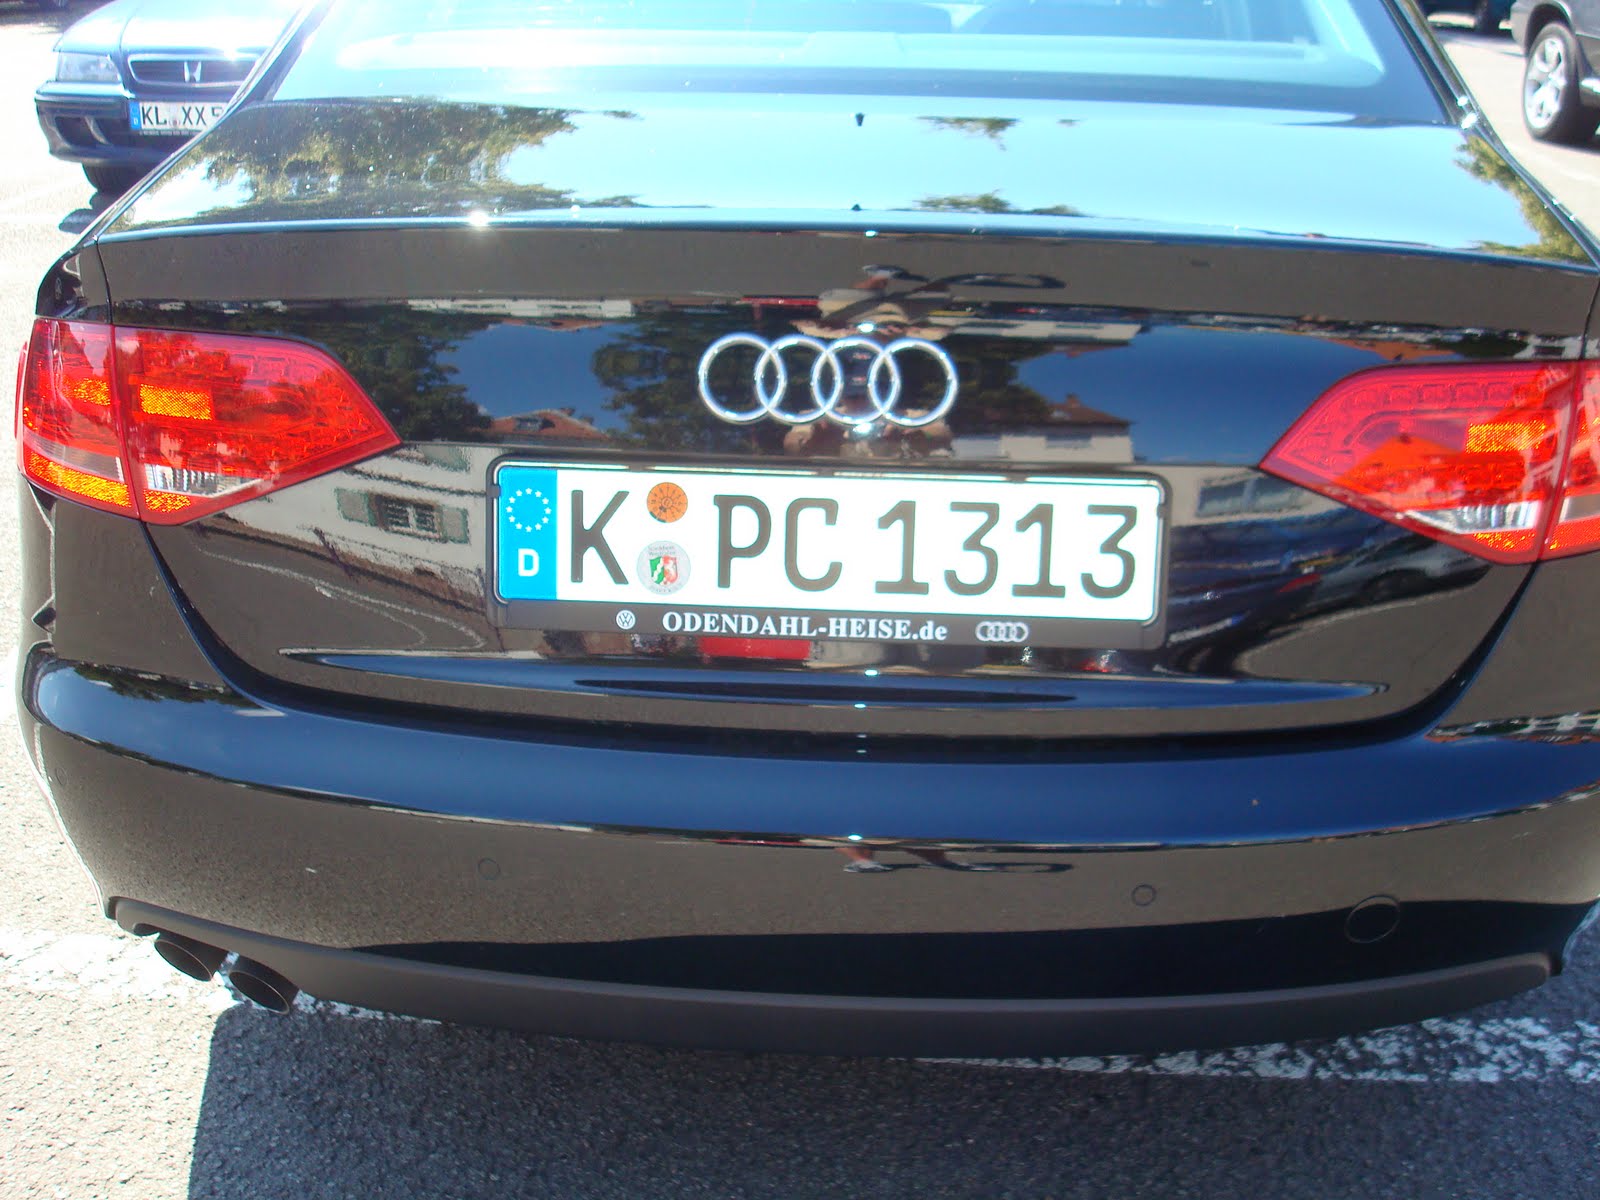 germany_car_plate.jpg